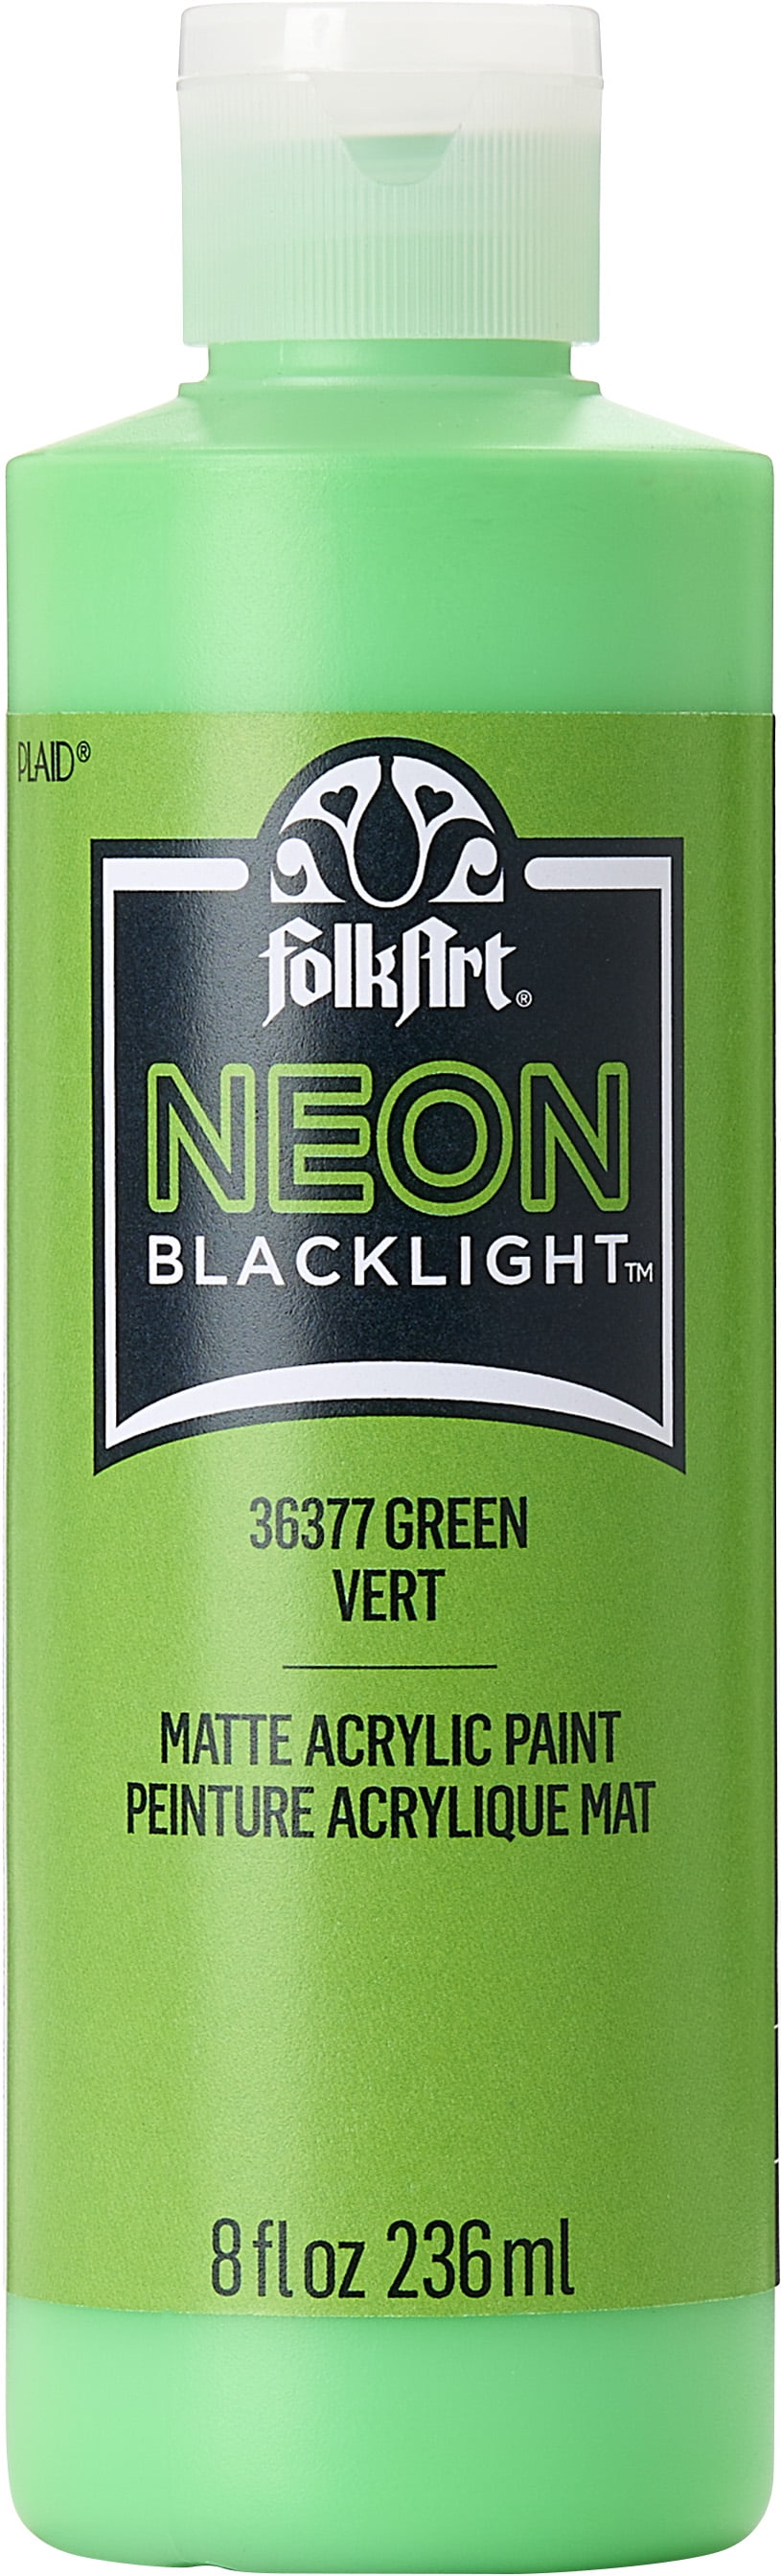 FolkArt Neon Blacklight Acrylic Craft Paint, Matte Finish, Green, 2 fl oz